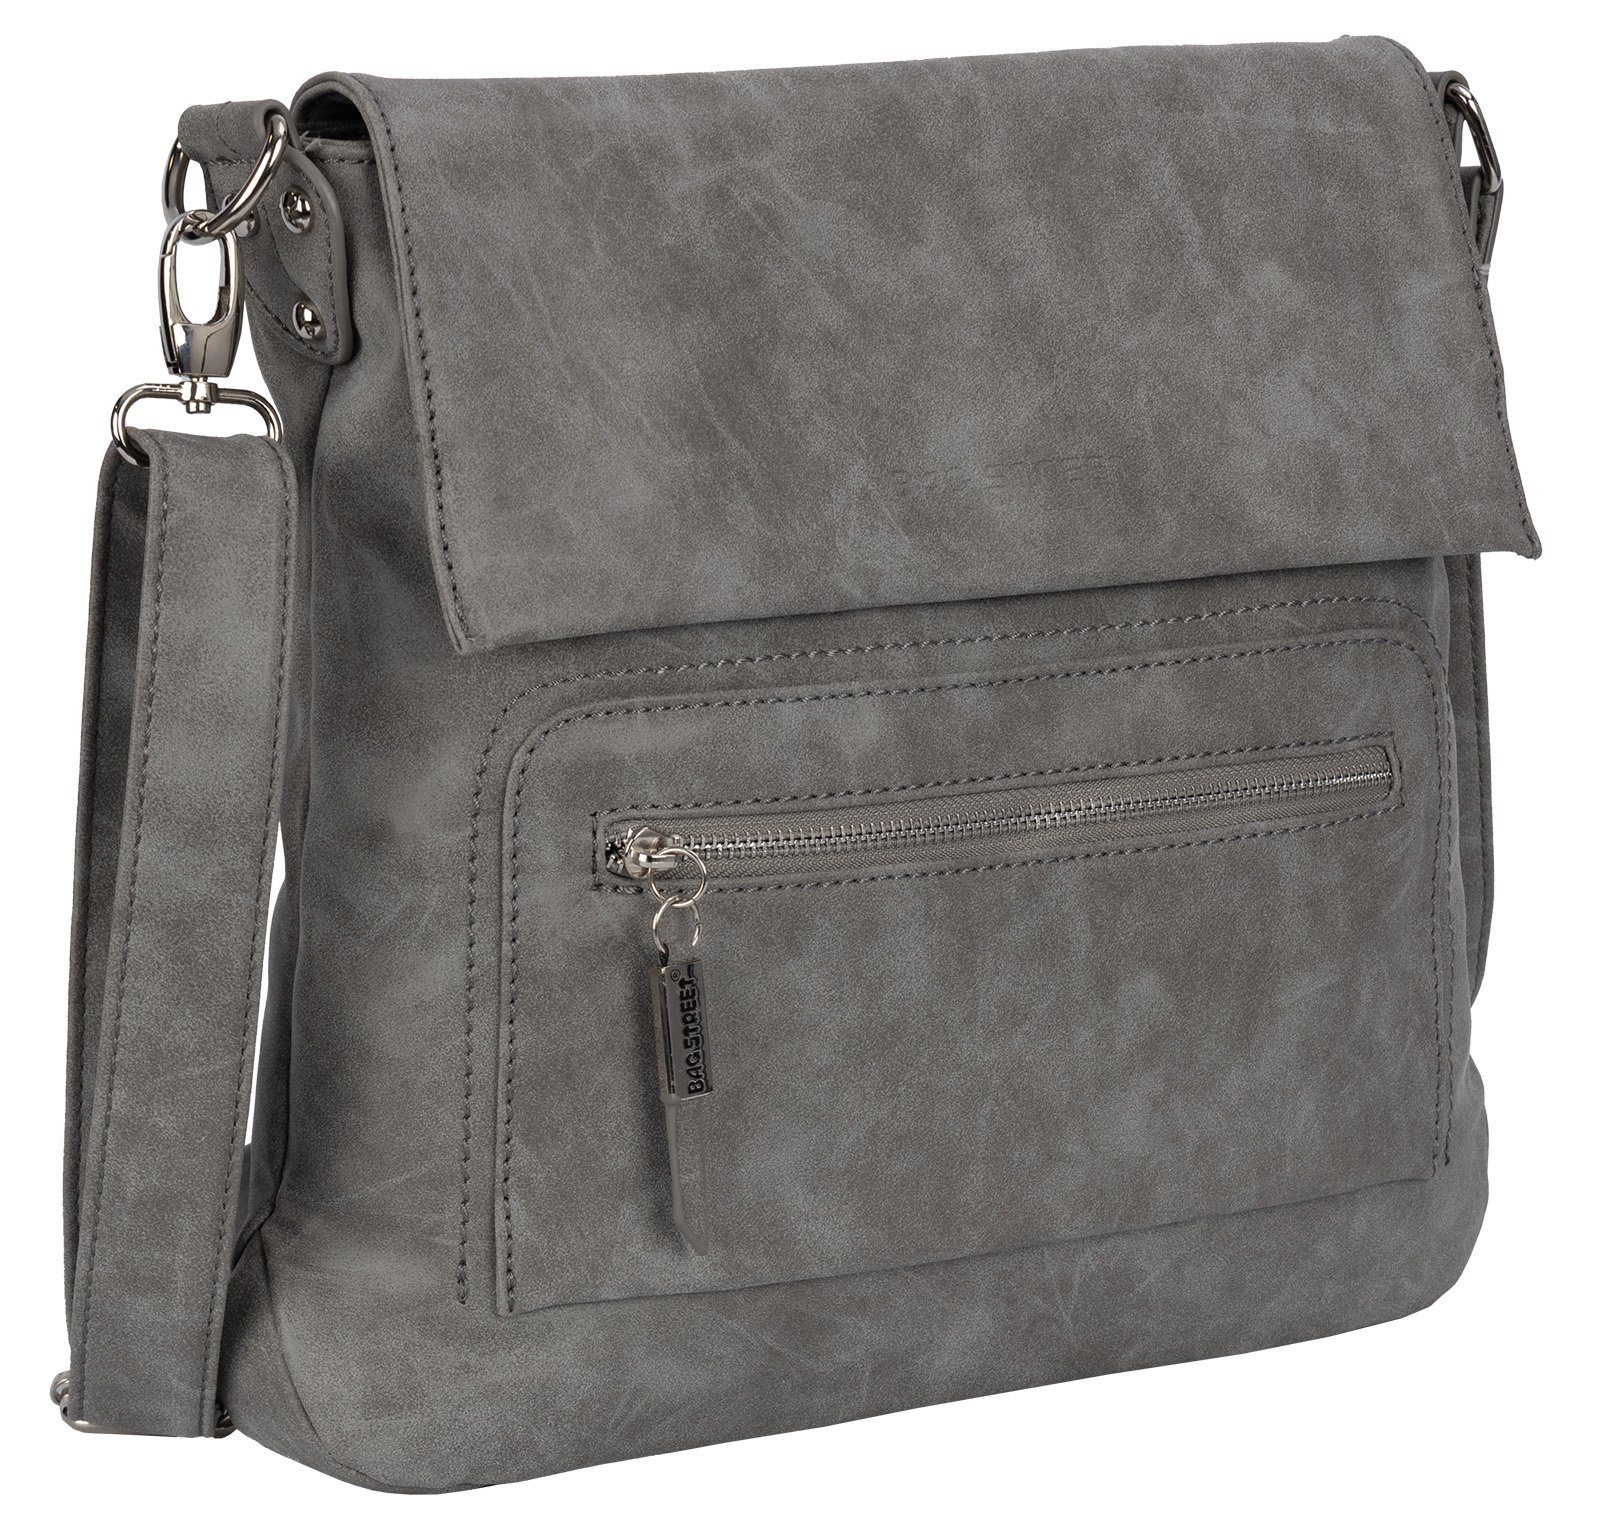 BAG STREET Schlüsseltasche Bag Street Damentasche Umhängetasche Handtasche Schultertasche T0103, als Schultertasche, Umhängetasche tragbar GRAU